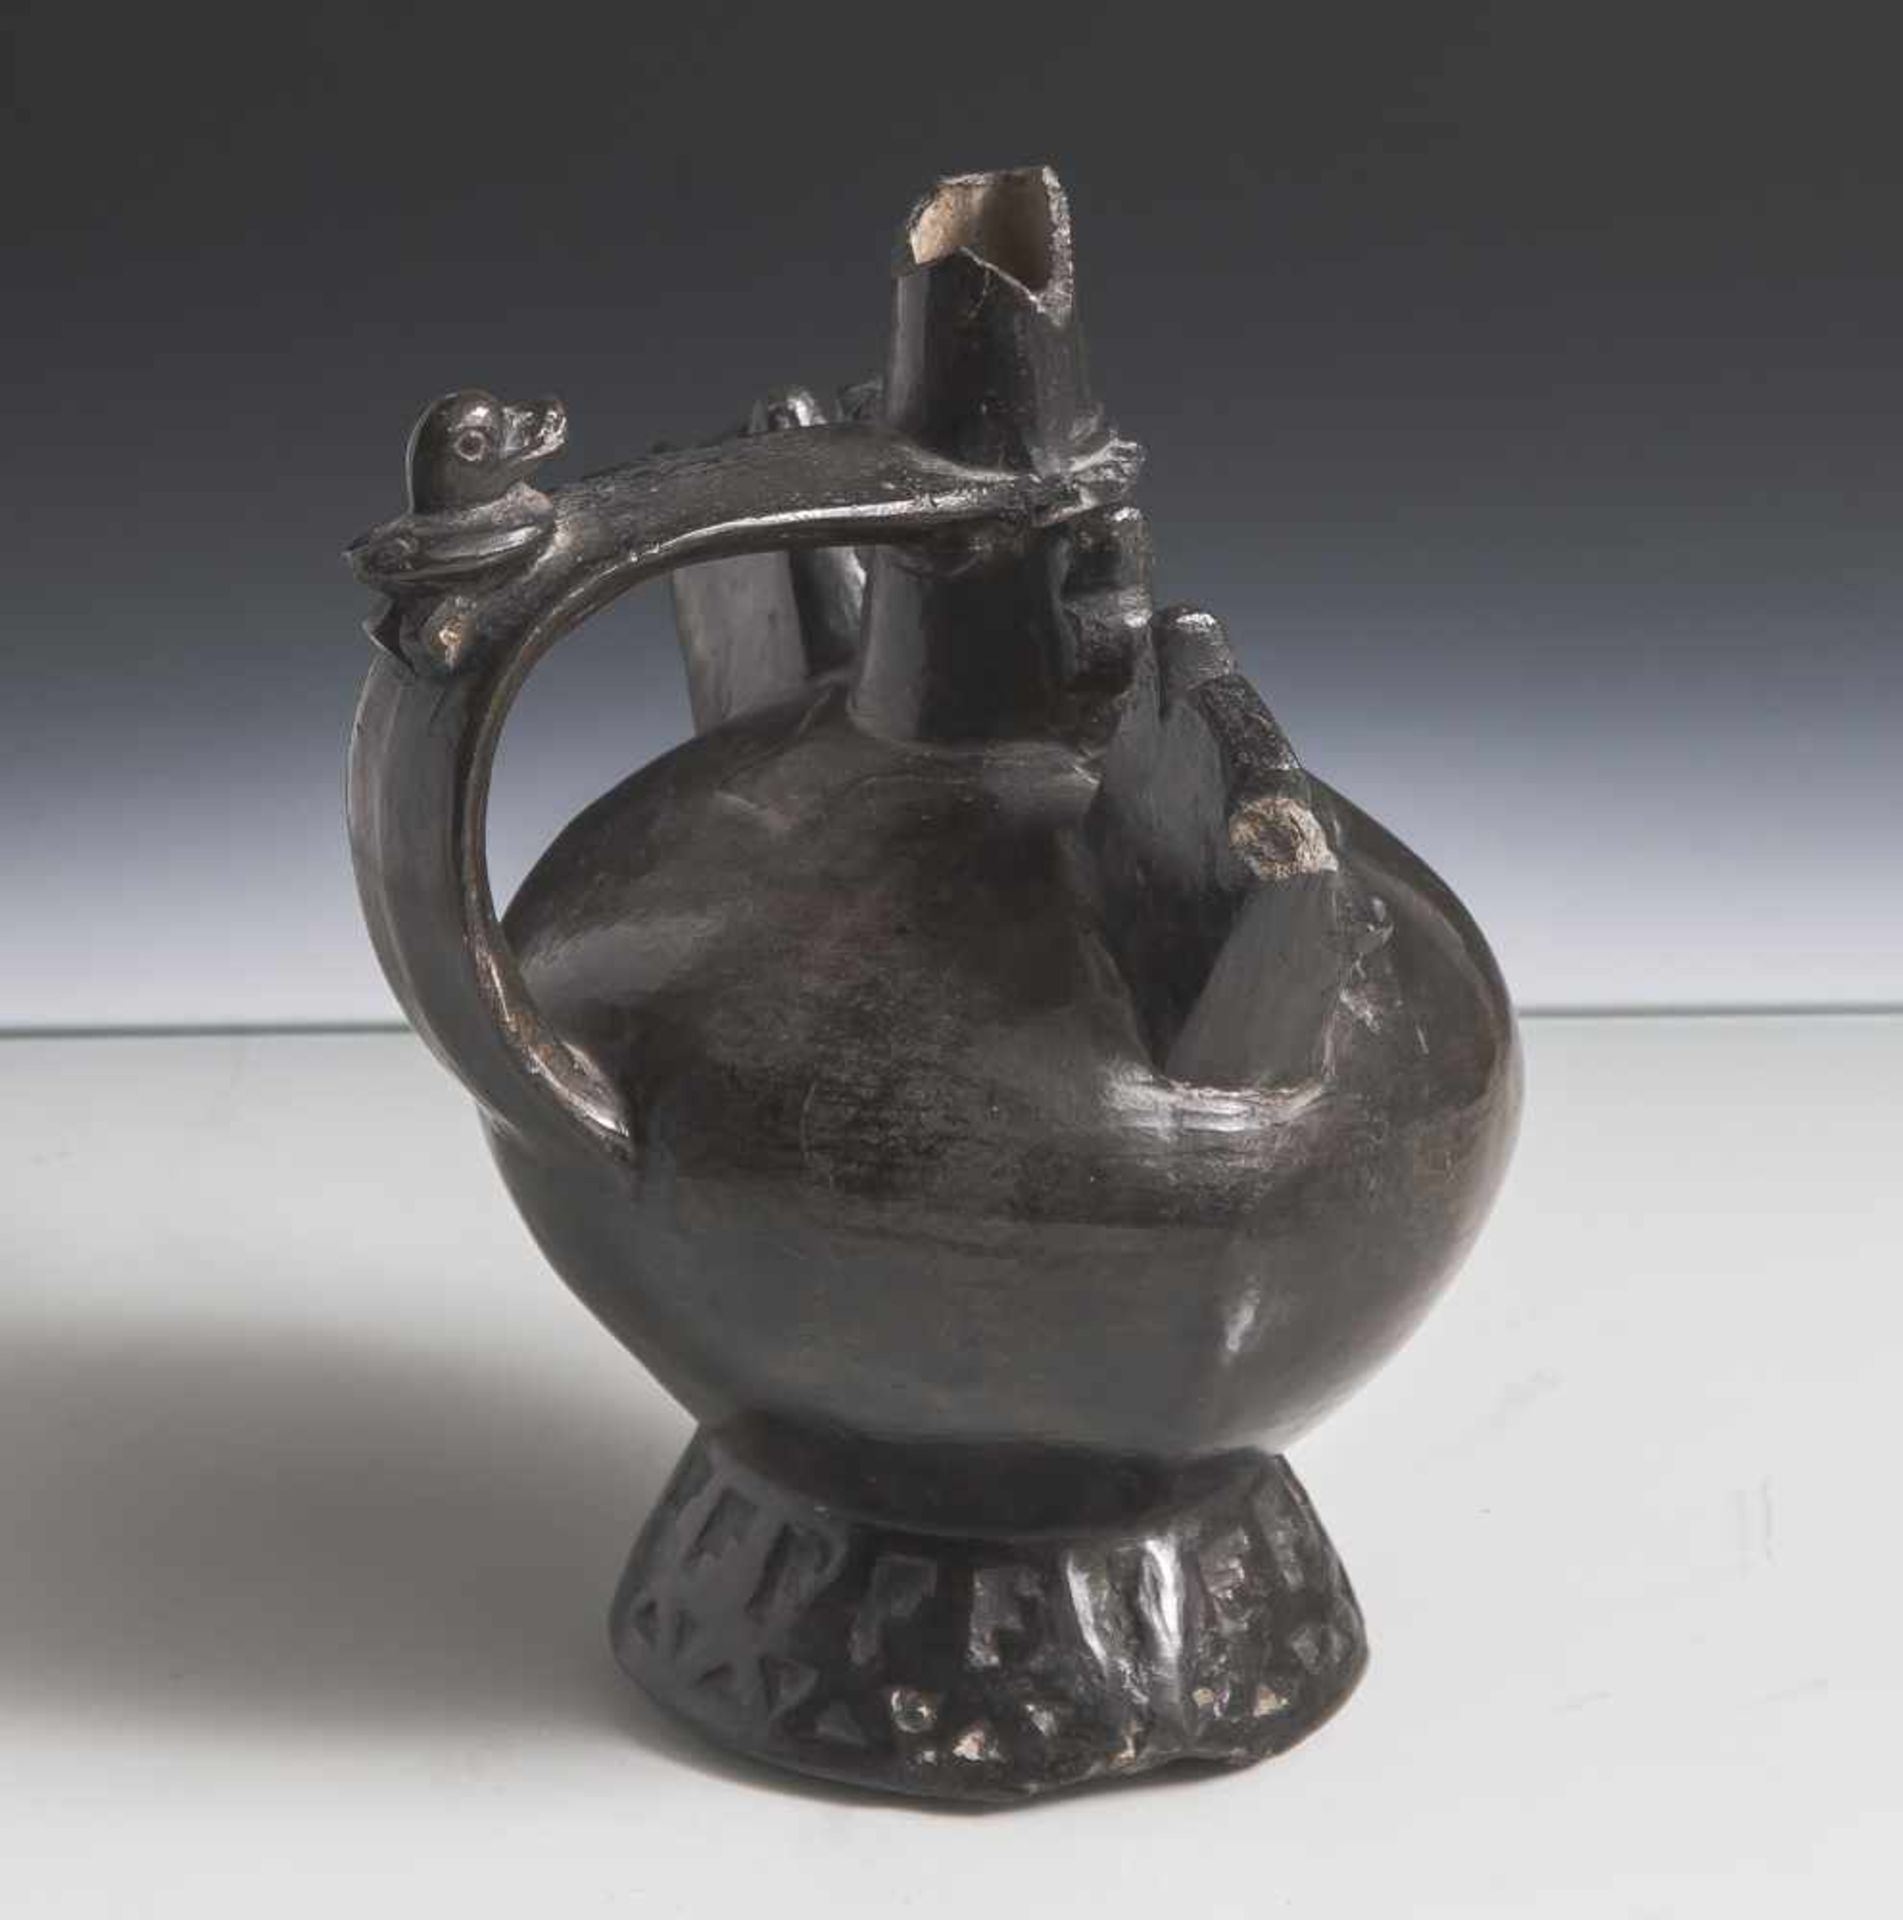 Figurengefäß, präkolumbianisch, Chimu-Kultur (ca. 900-1470 n. Chr.), grauer Scherben, dunkle